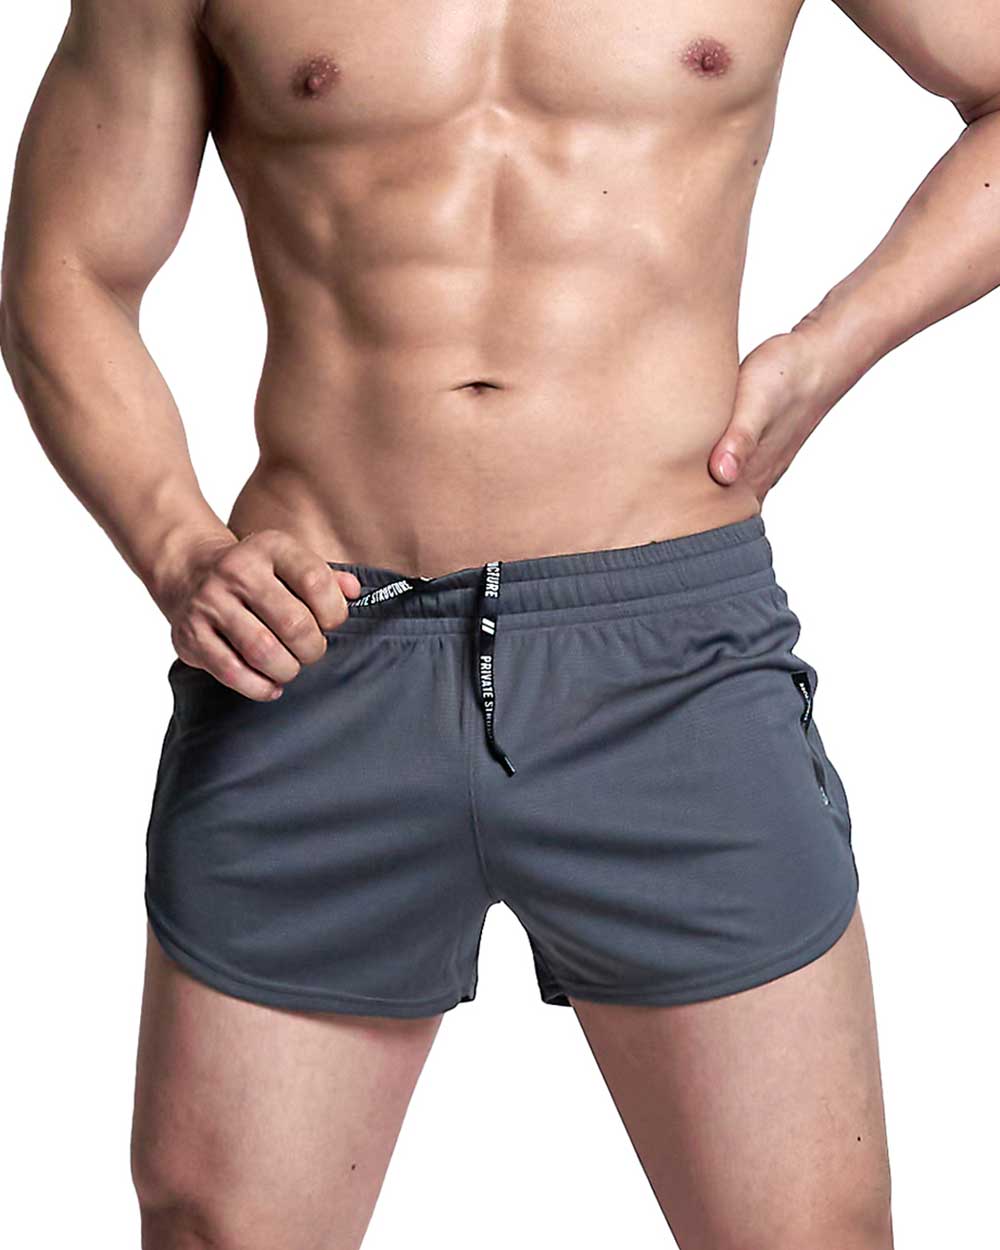 Cardio Quick Dry Shorts - Grey [4329]